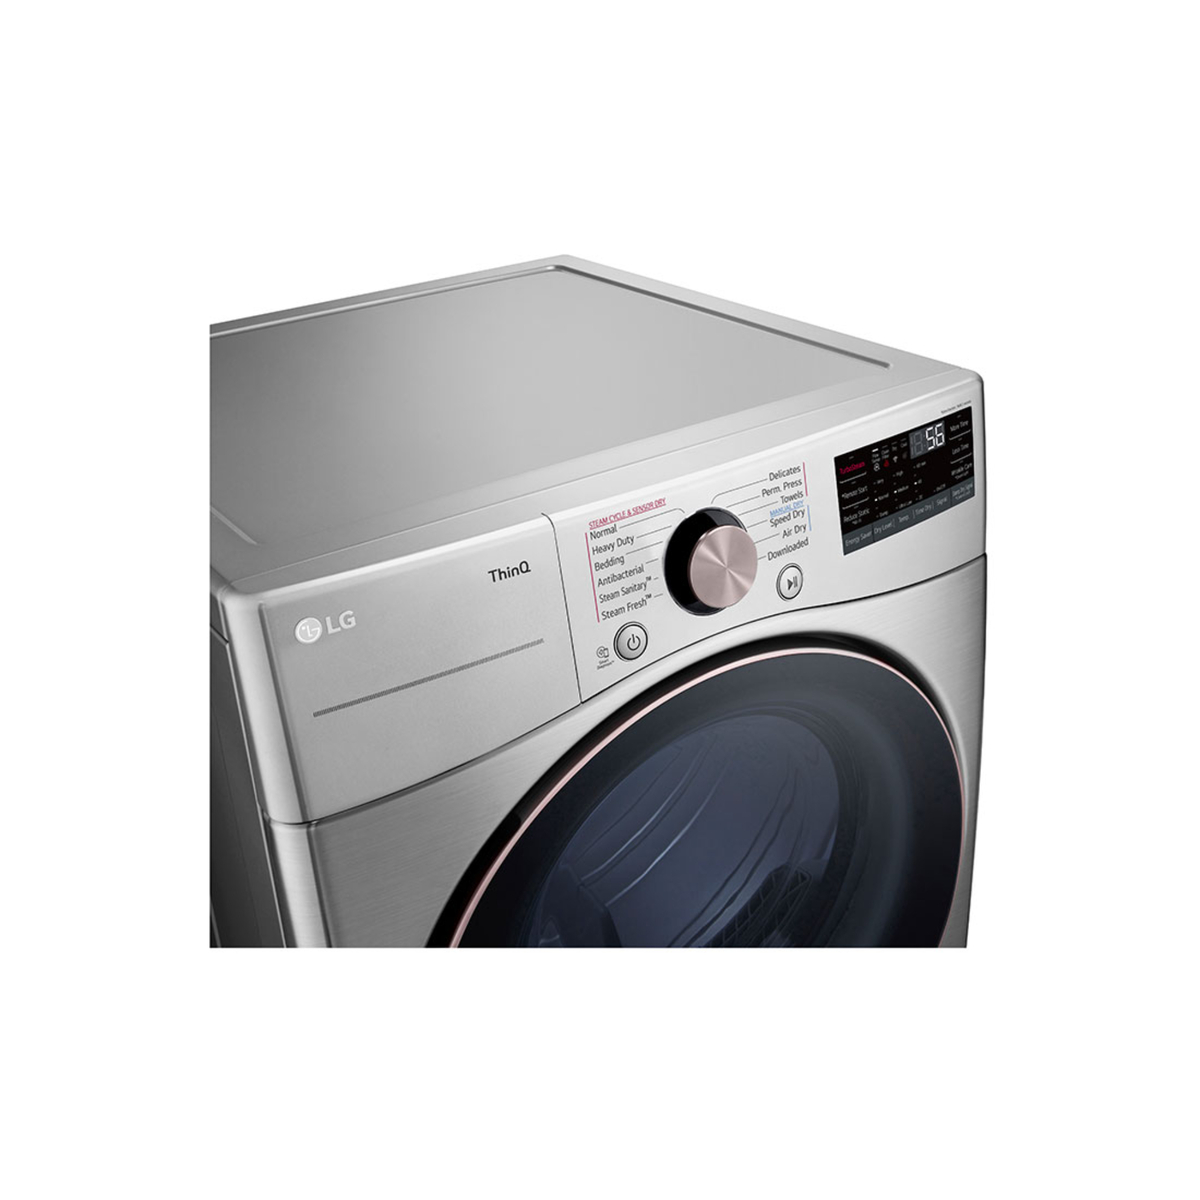 LG Dual Inverter Dryer, 16 kg, Stainless Silver, RH16U8EVCW